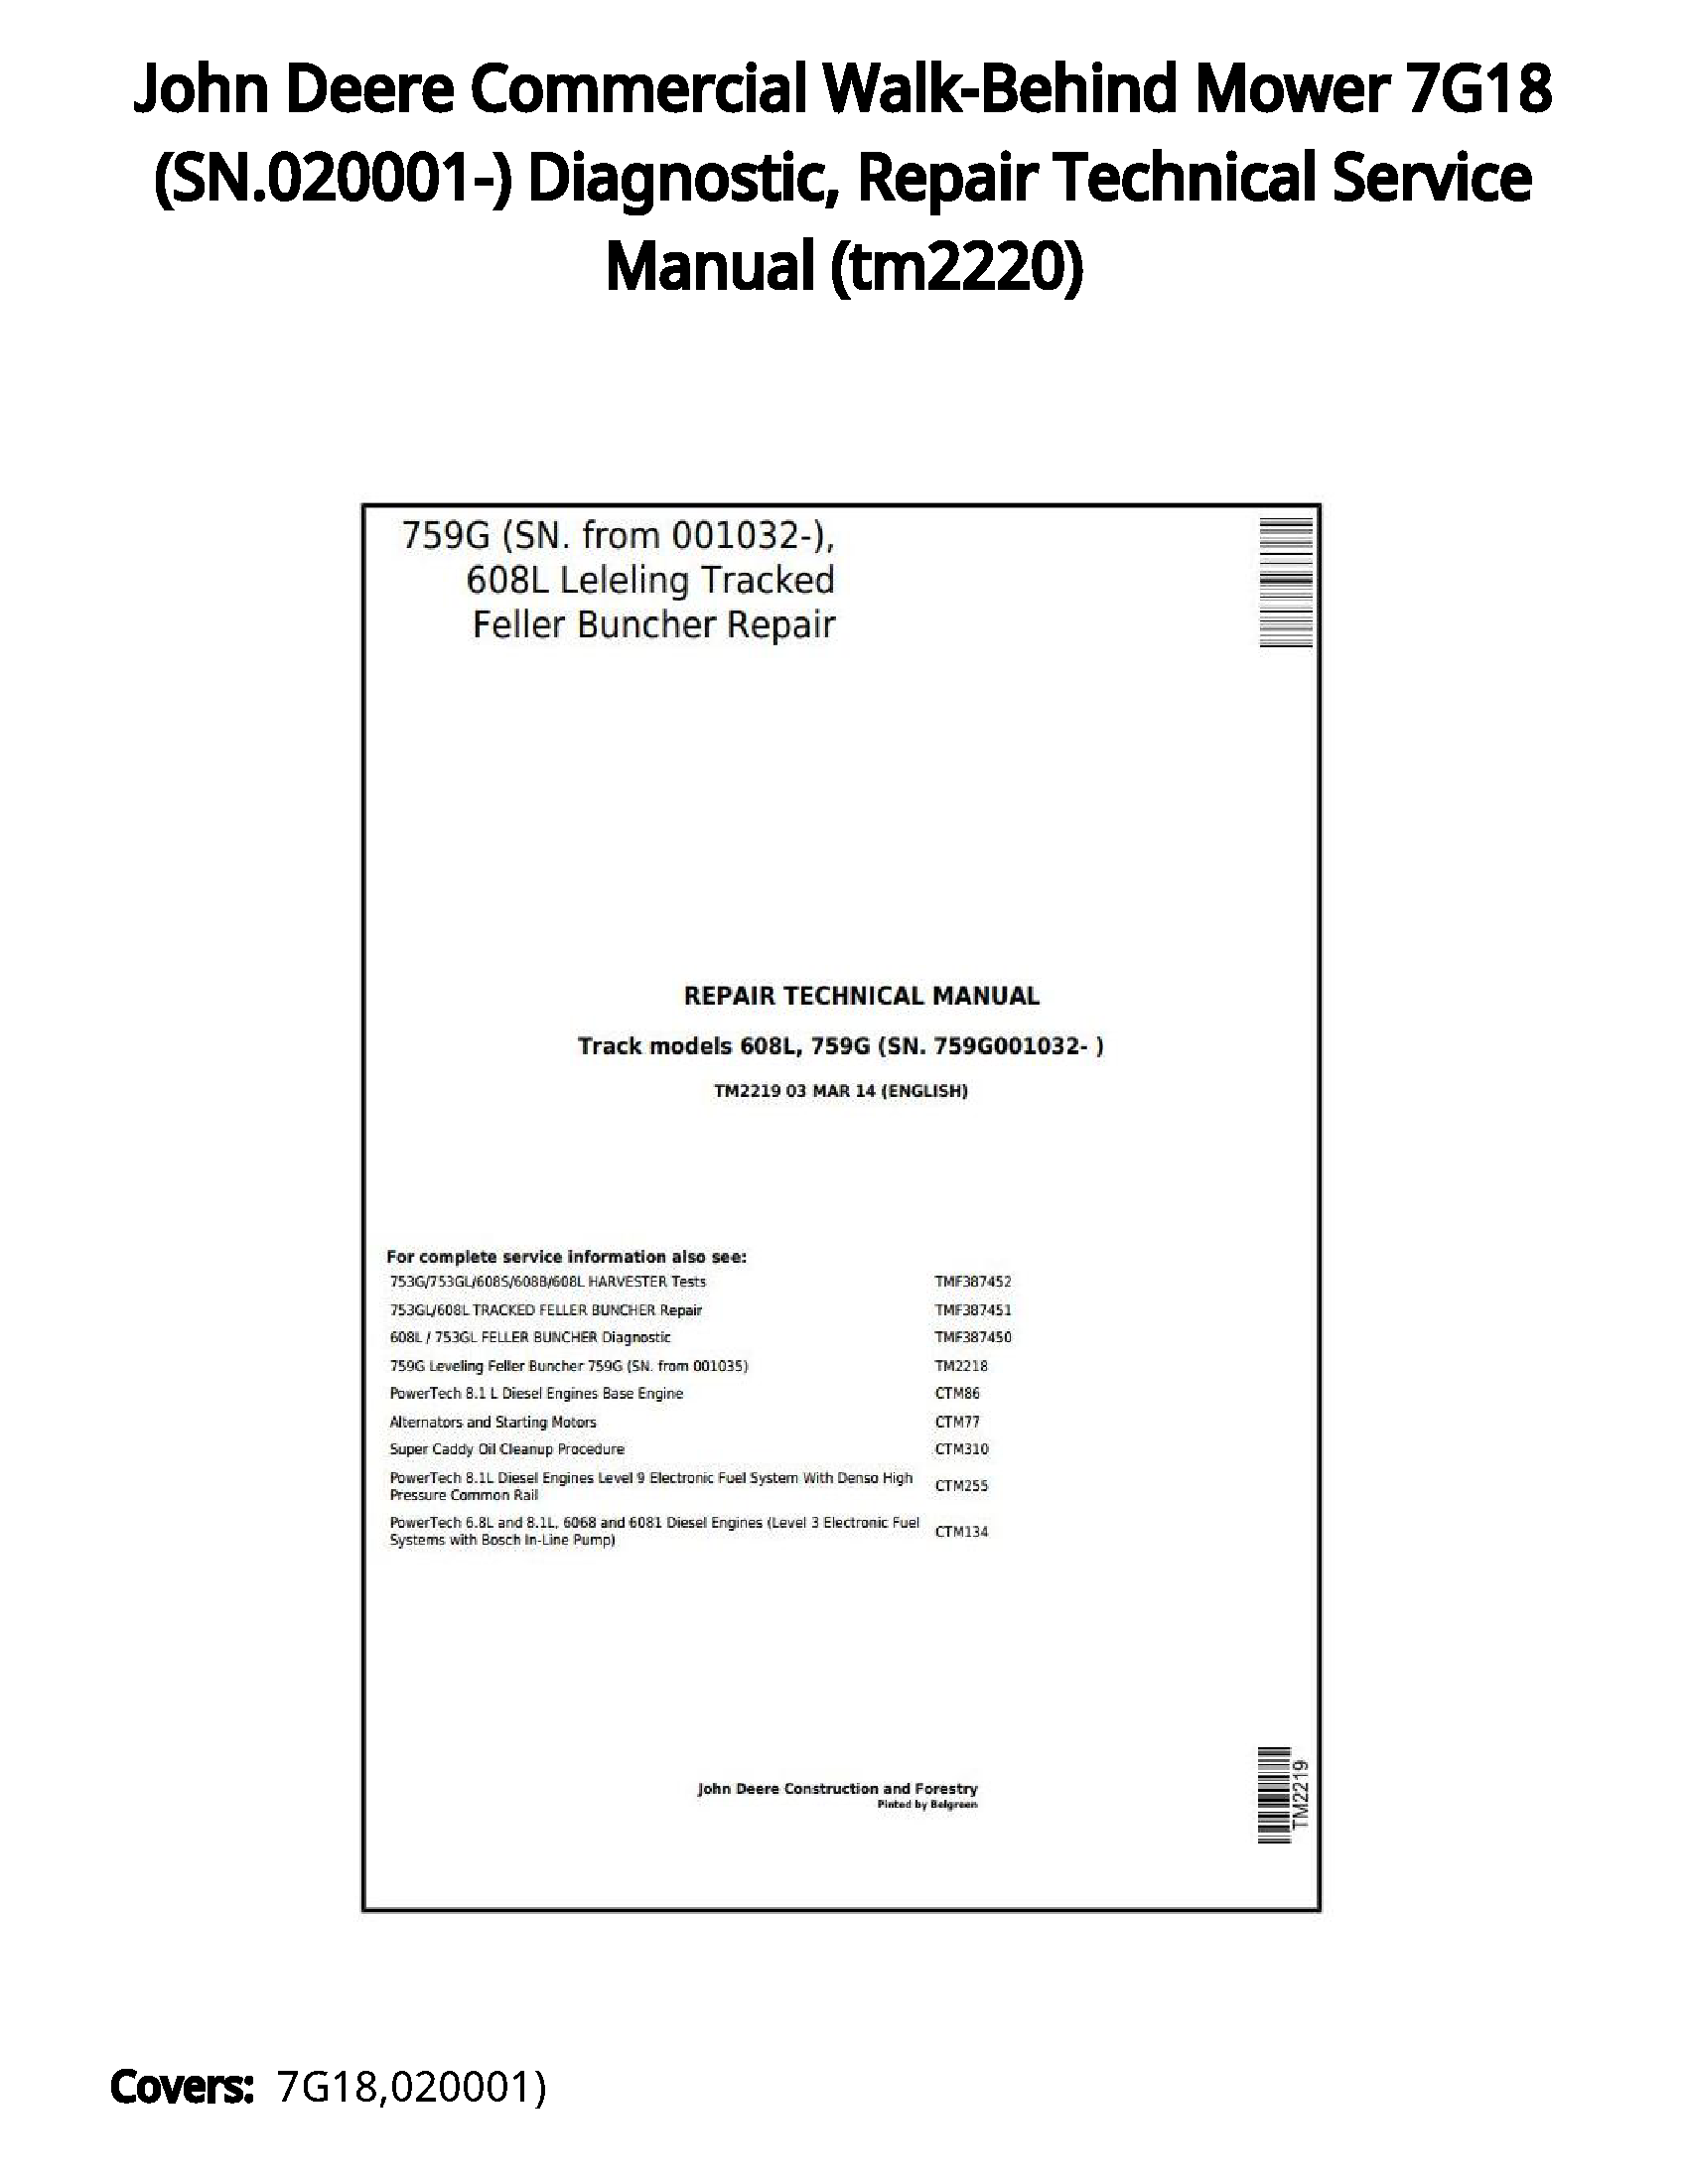 John Deere Commercial Walk-Behind Mower 7G18 (SN.020001-) Diagnostic  Repair Technical Service Manual - tm2220